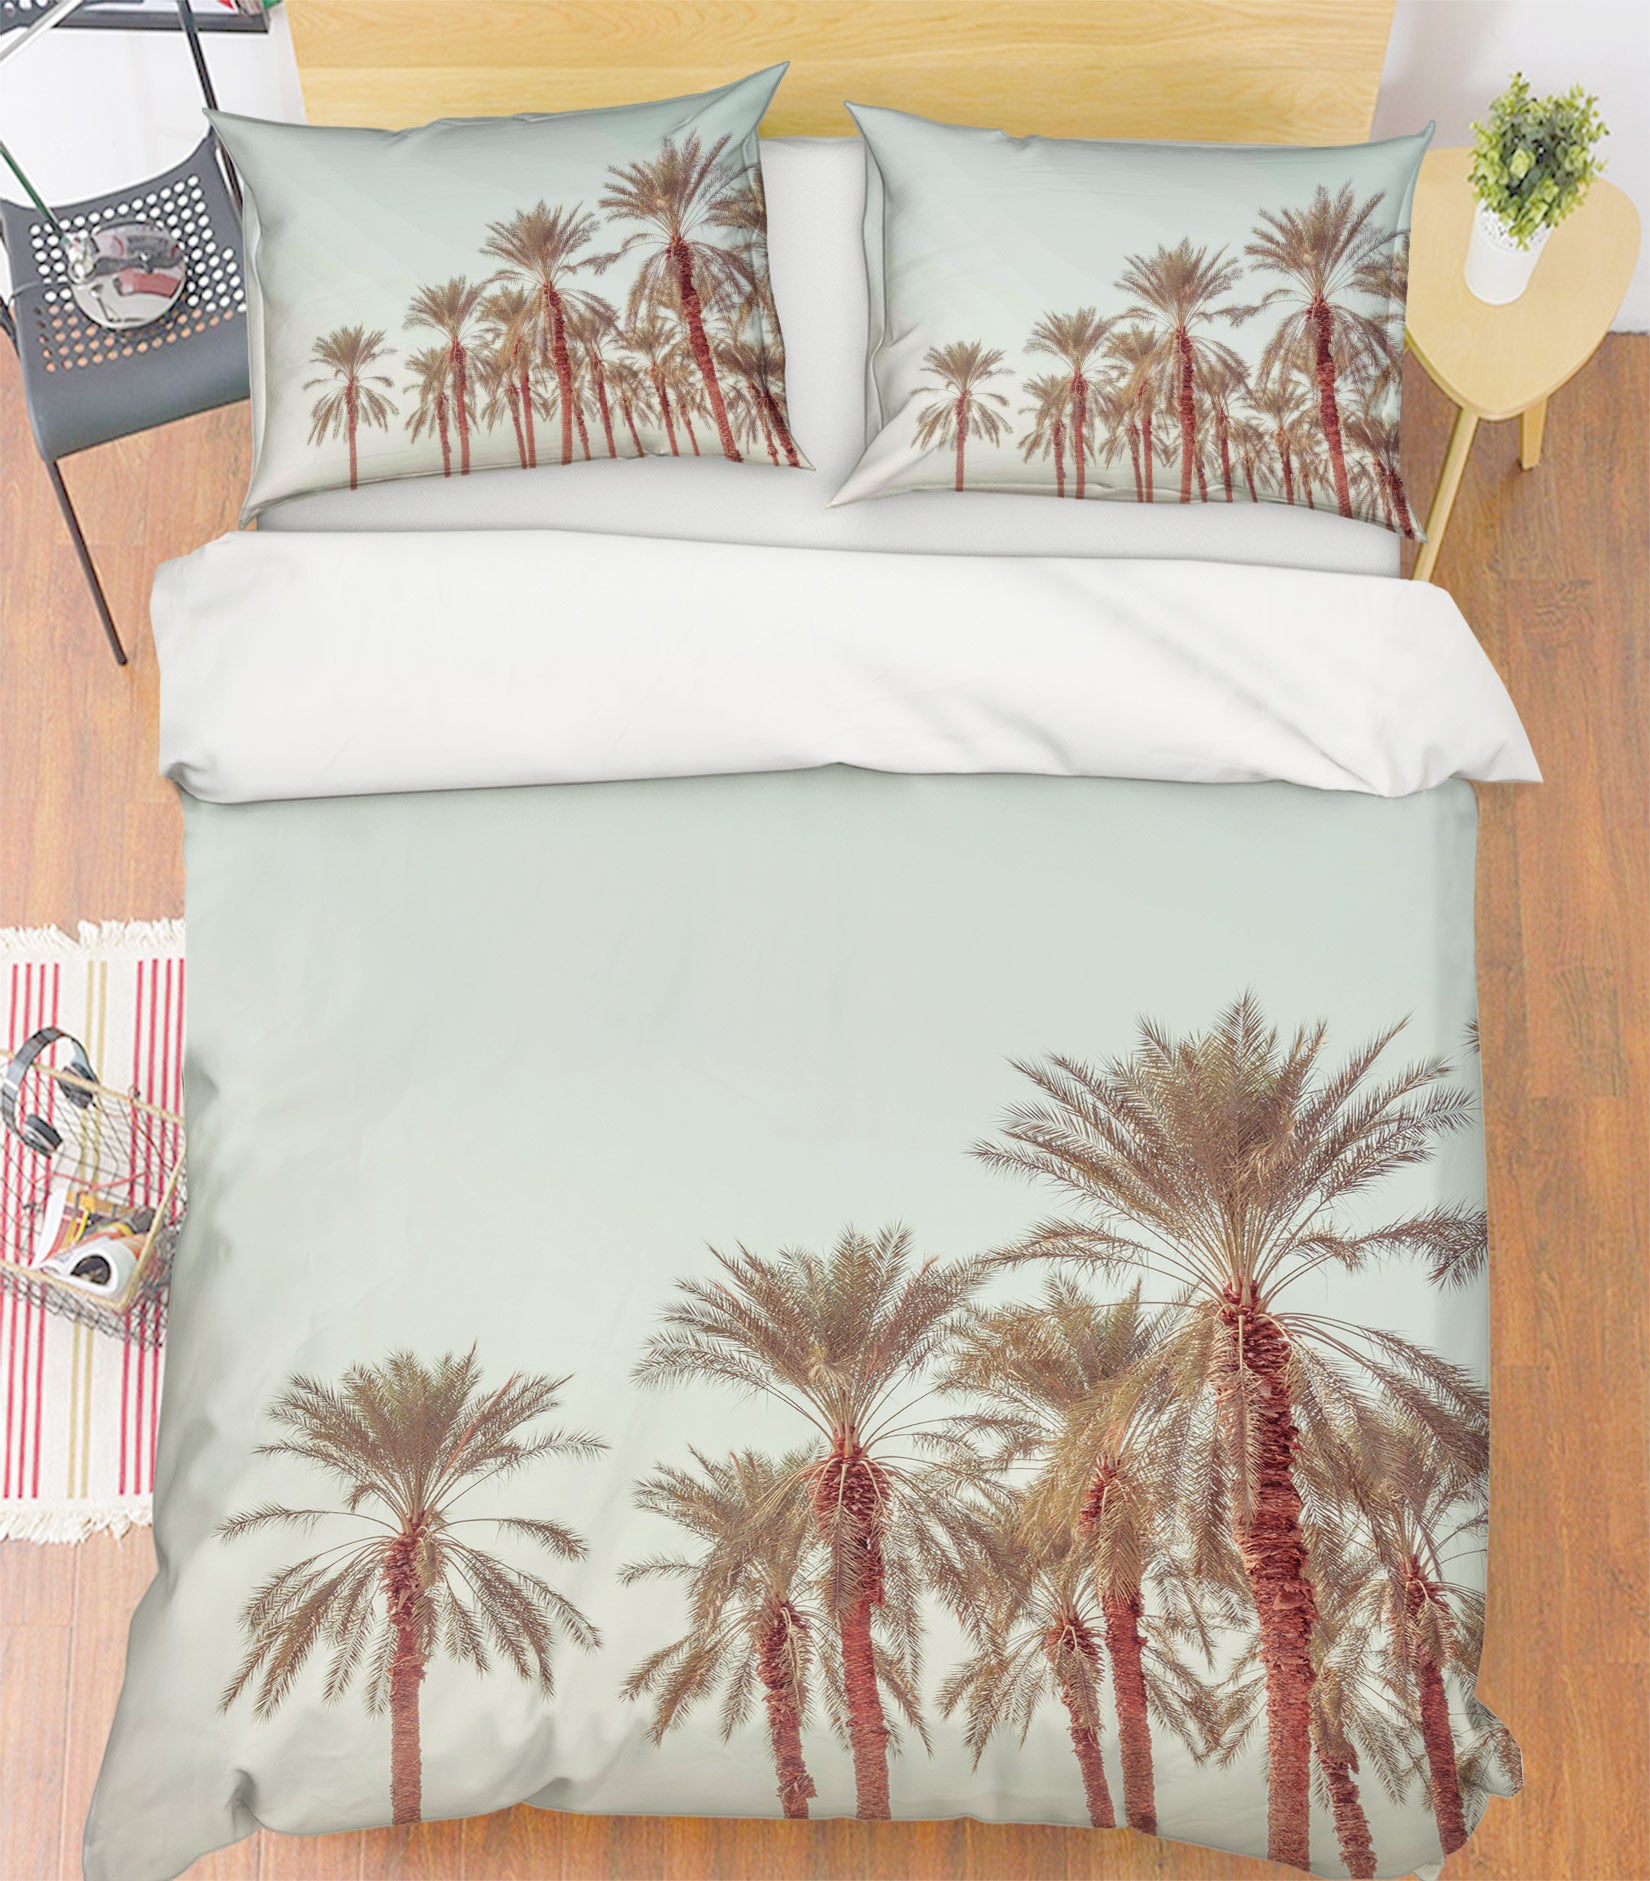 3D Palm Trees 1078 Assaf Frank Bedding Bed Pillowcases Quilt